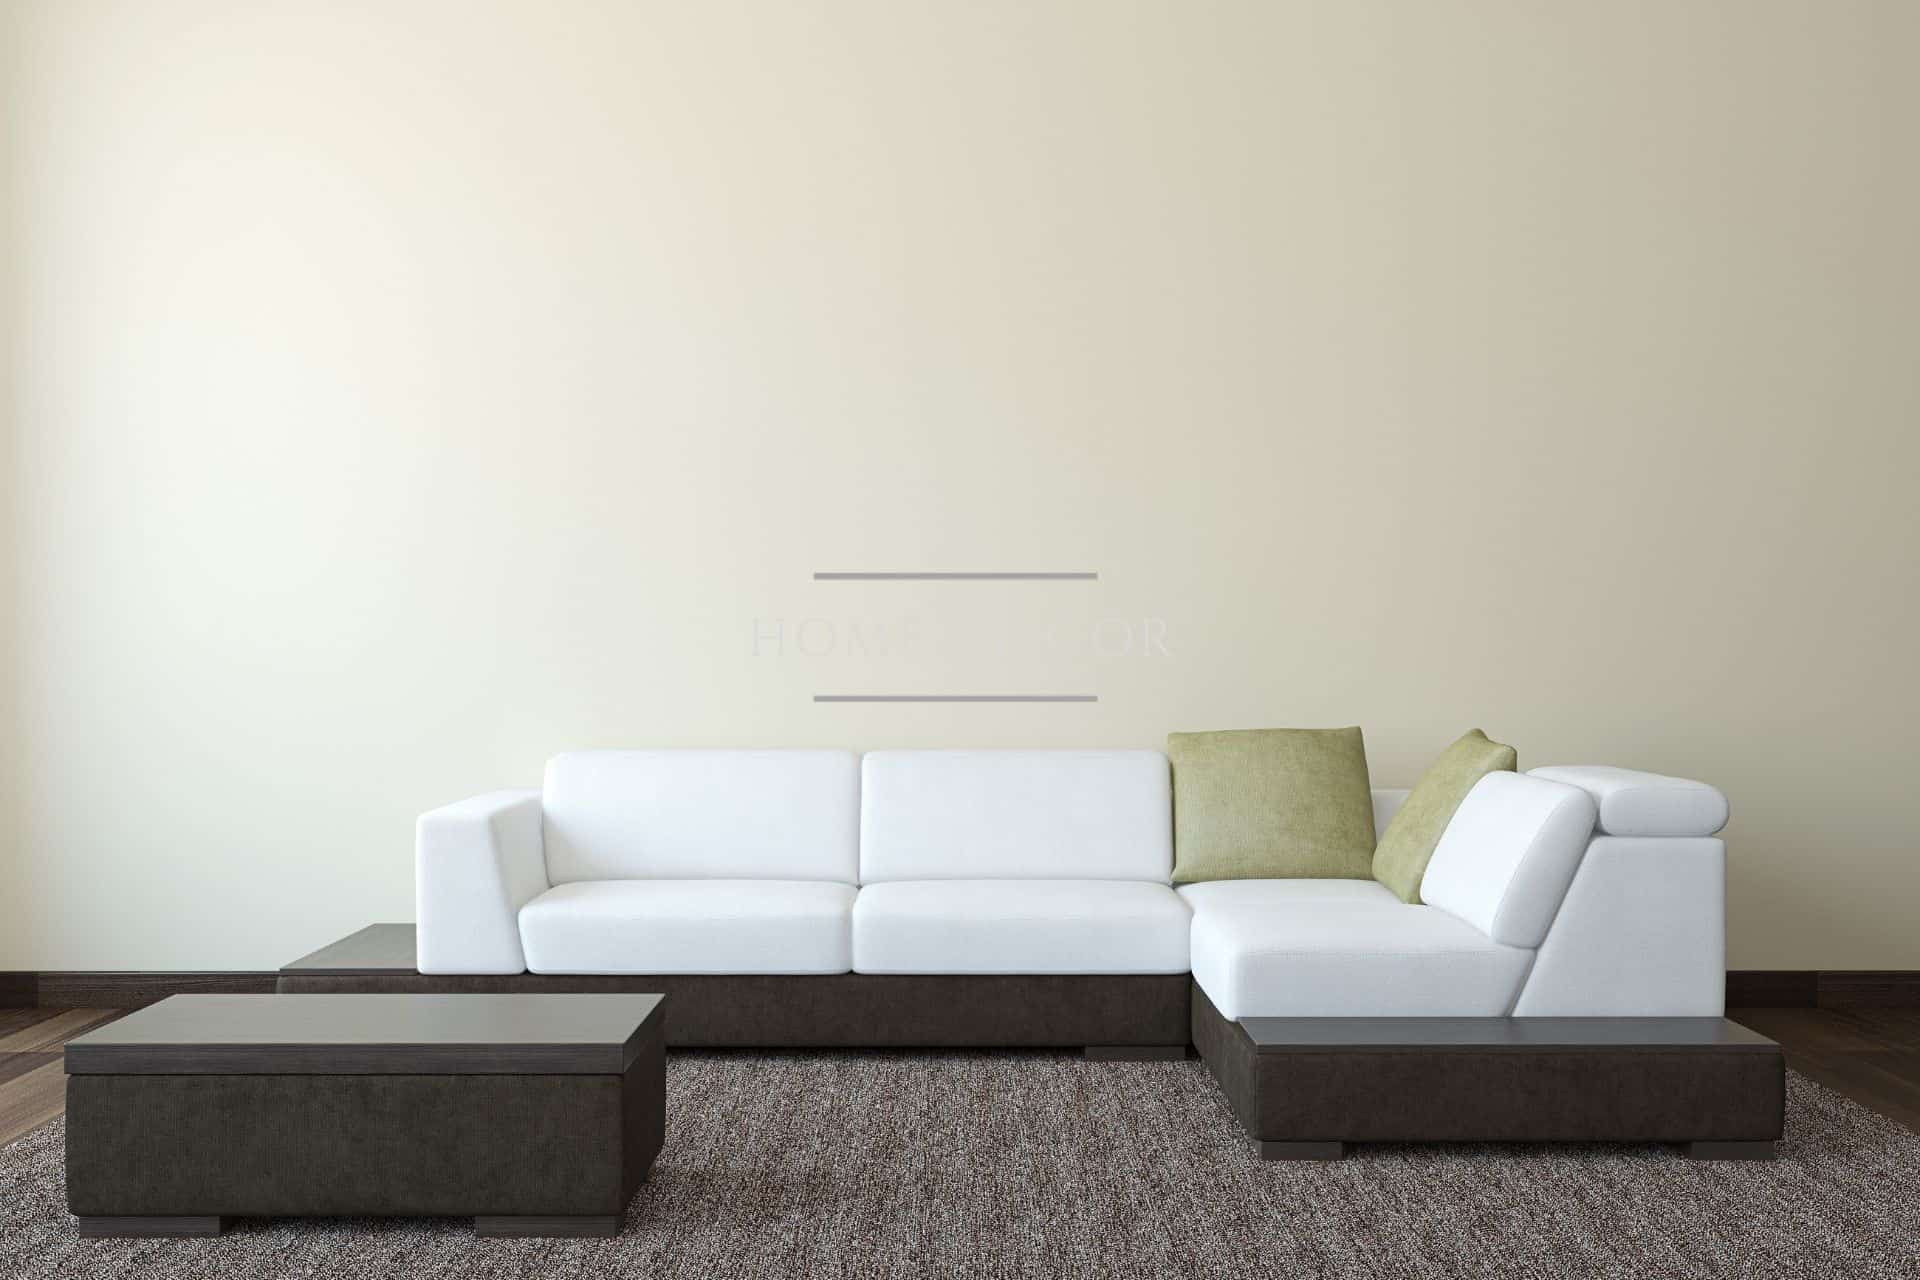 Super-Retro white modern style Sofa